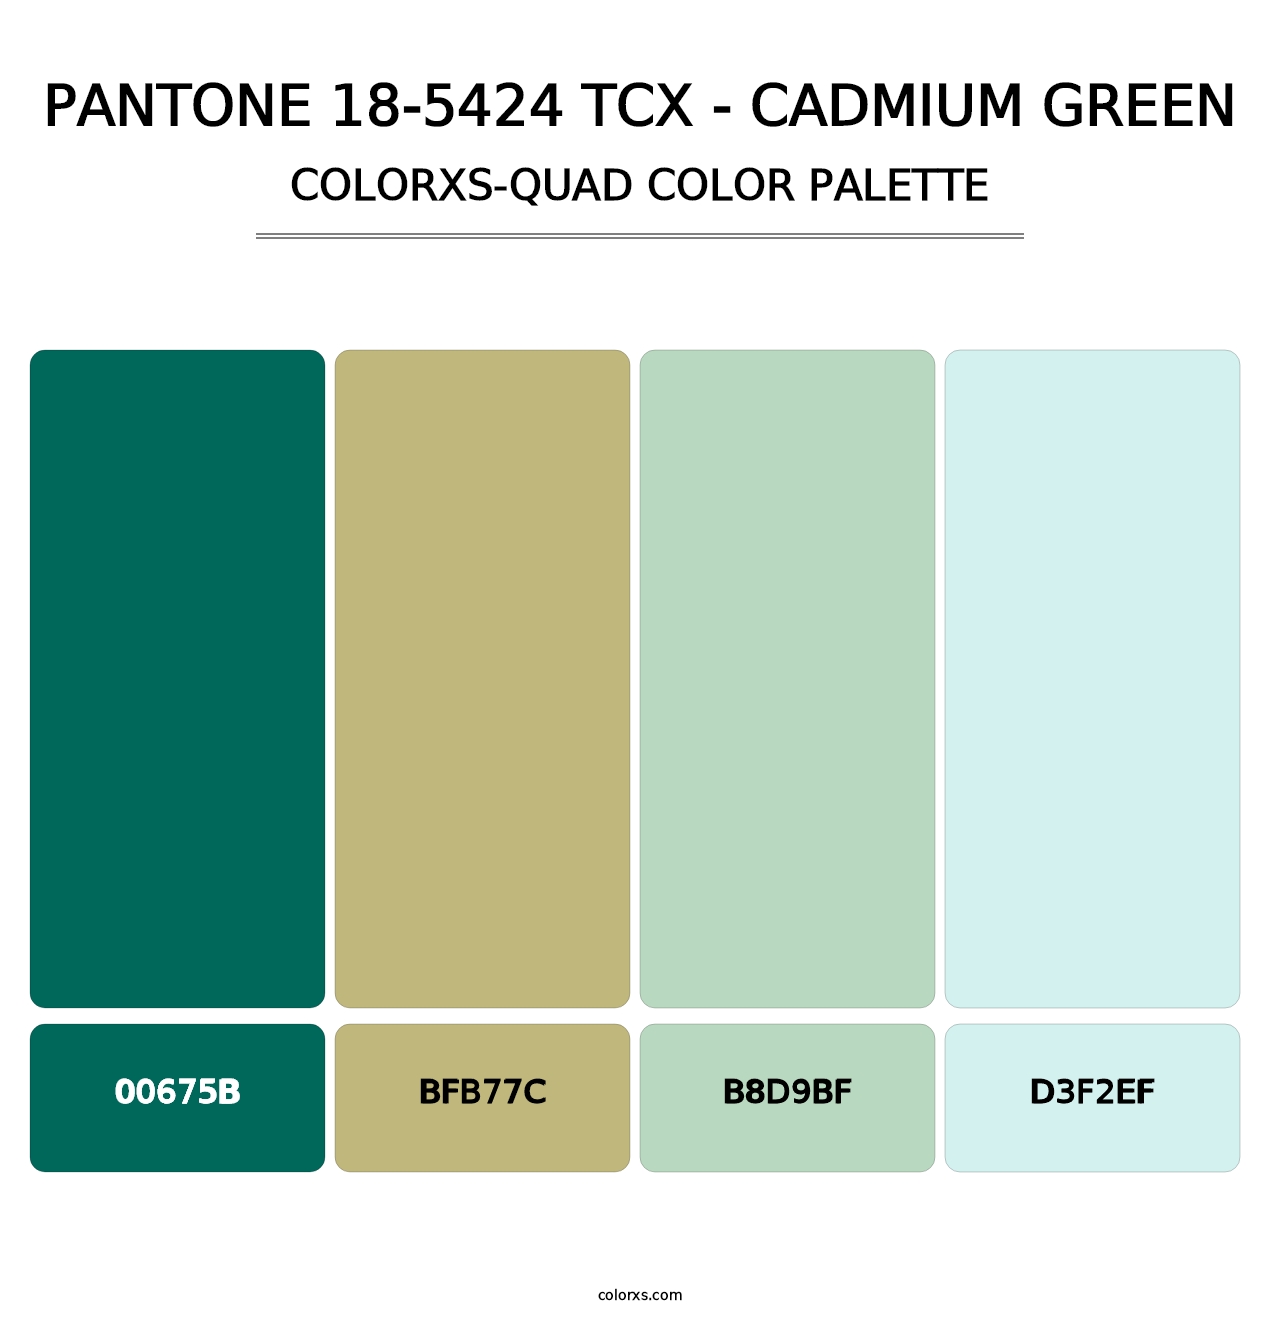 PANTONE 18-5424 TCX - Cadmium Green - Colorxs Quad Palette